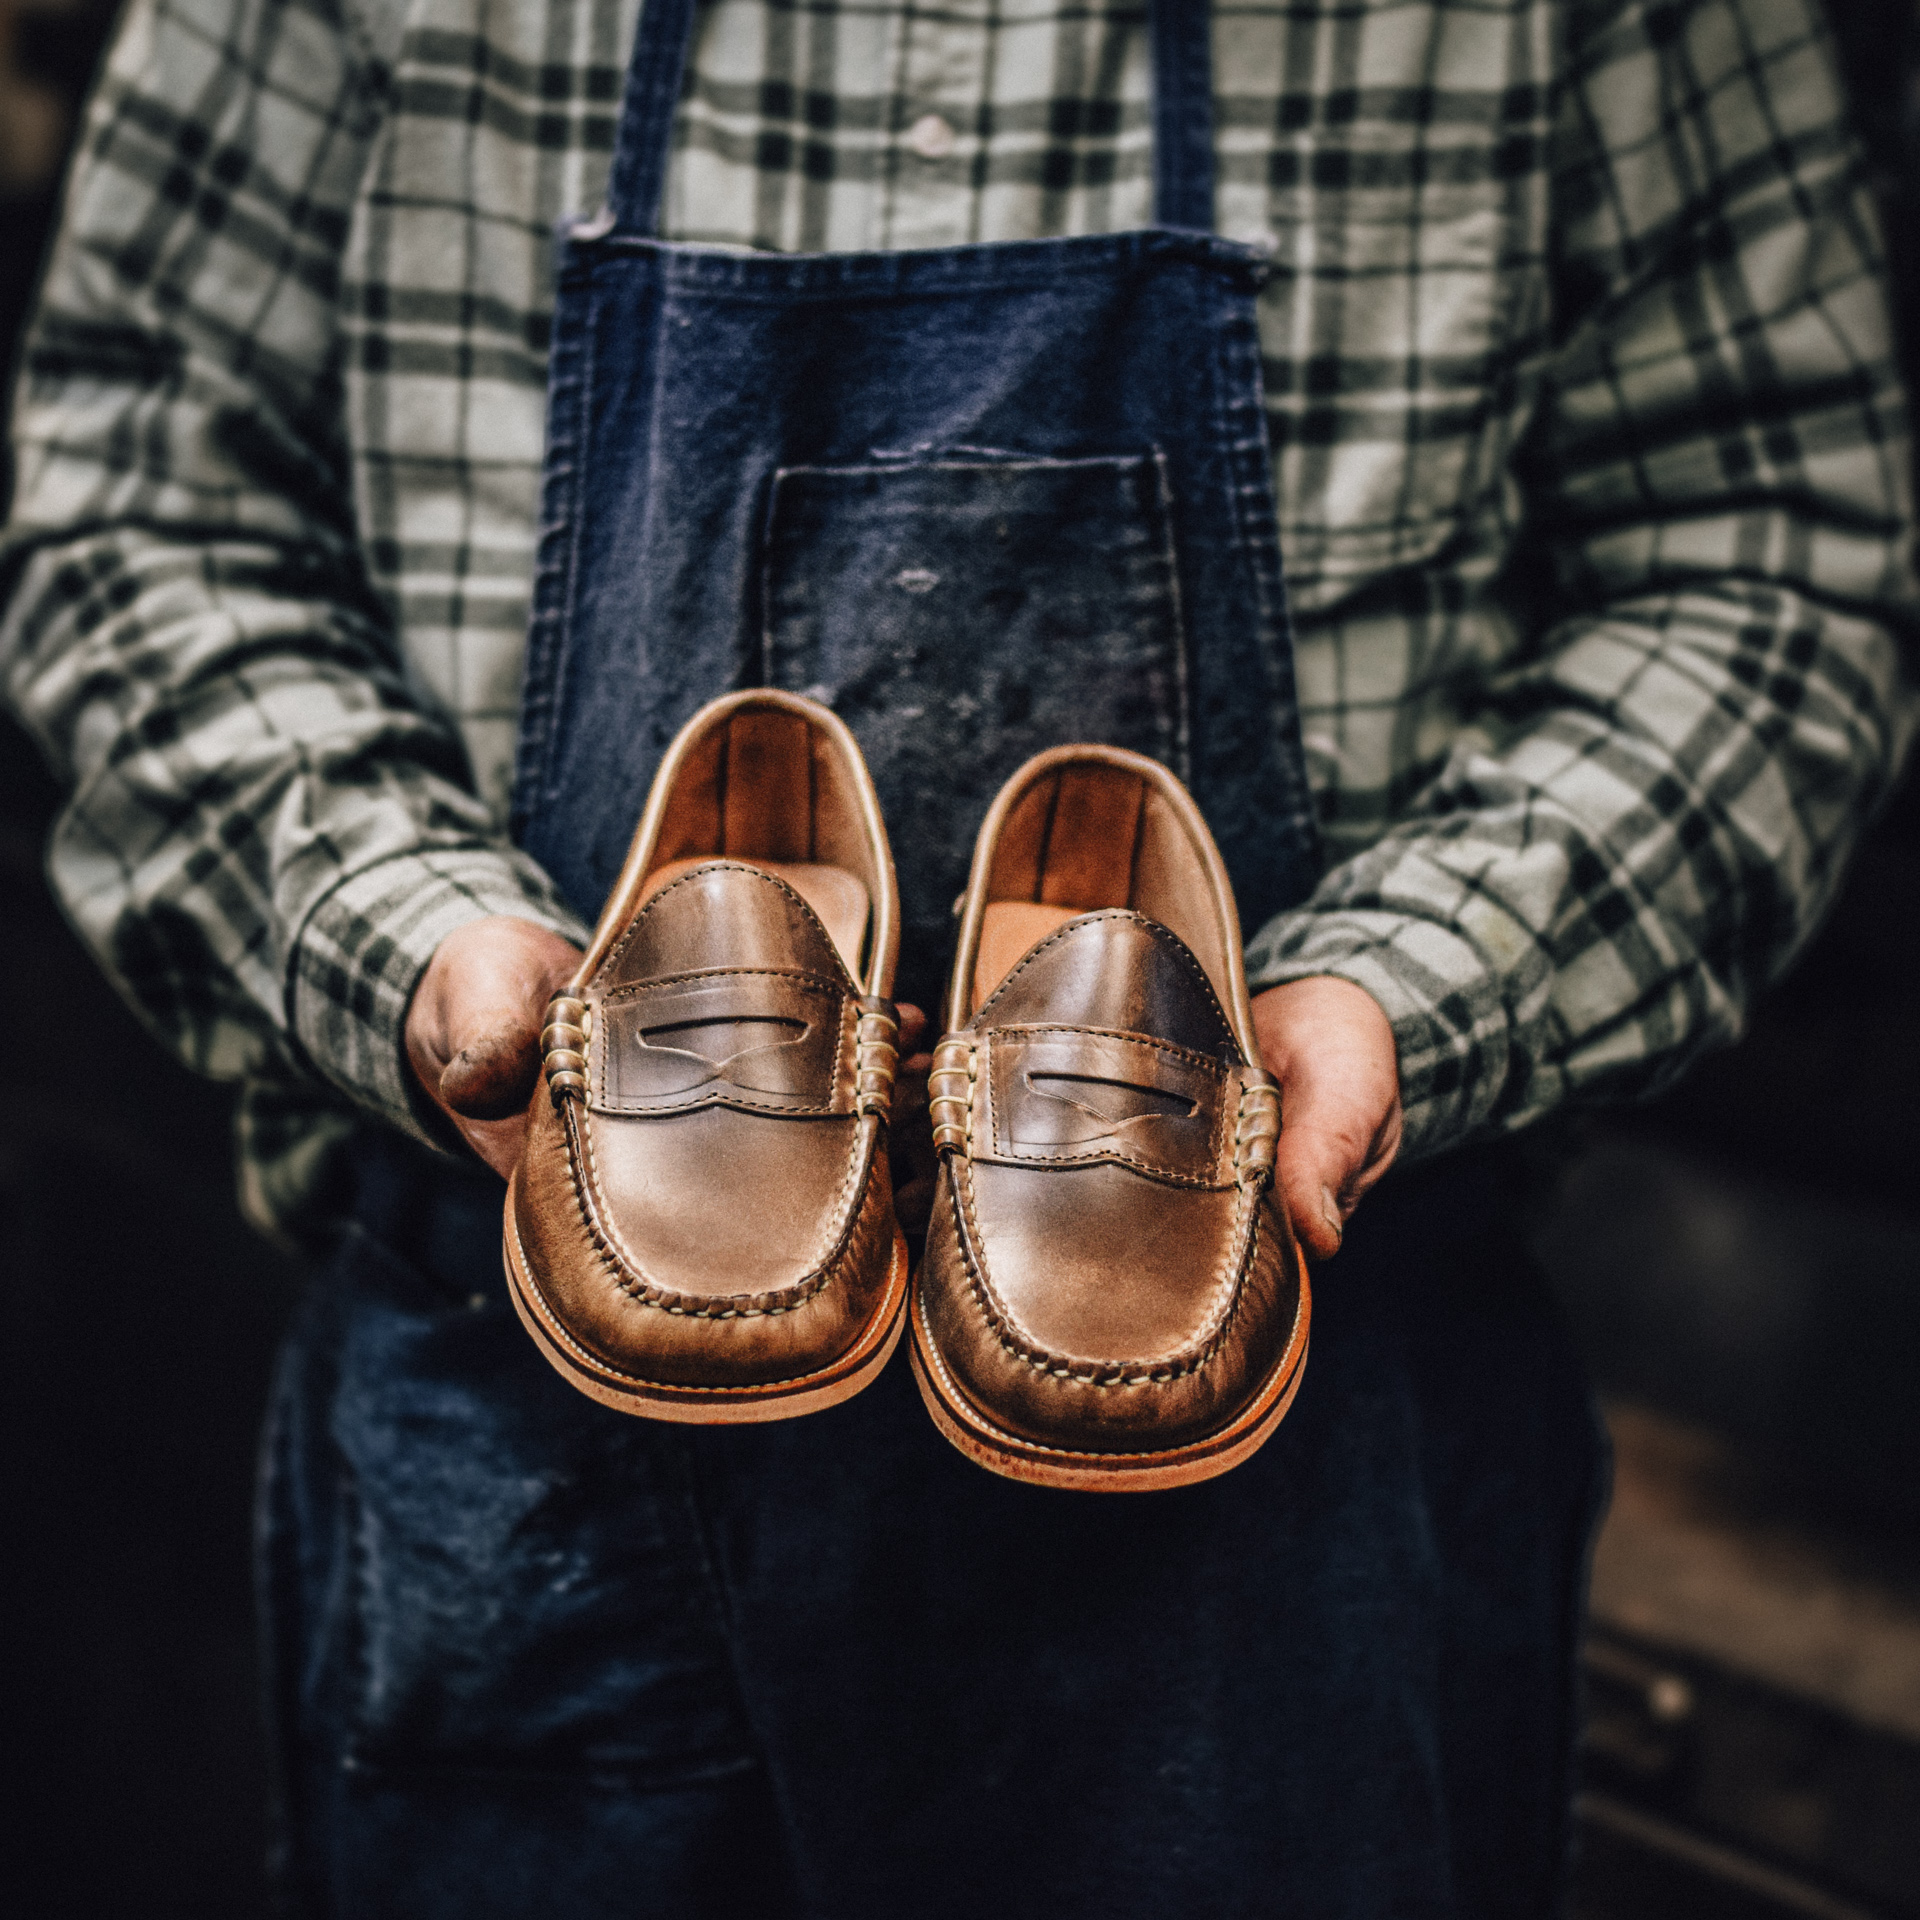 oak street bootmakers factory loafer